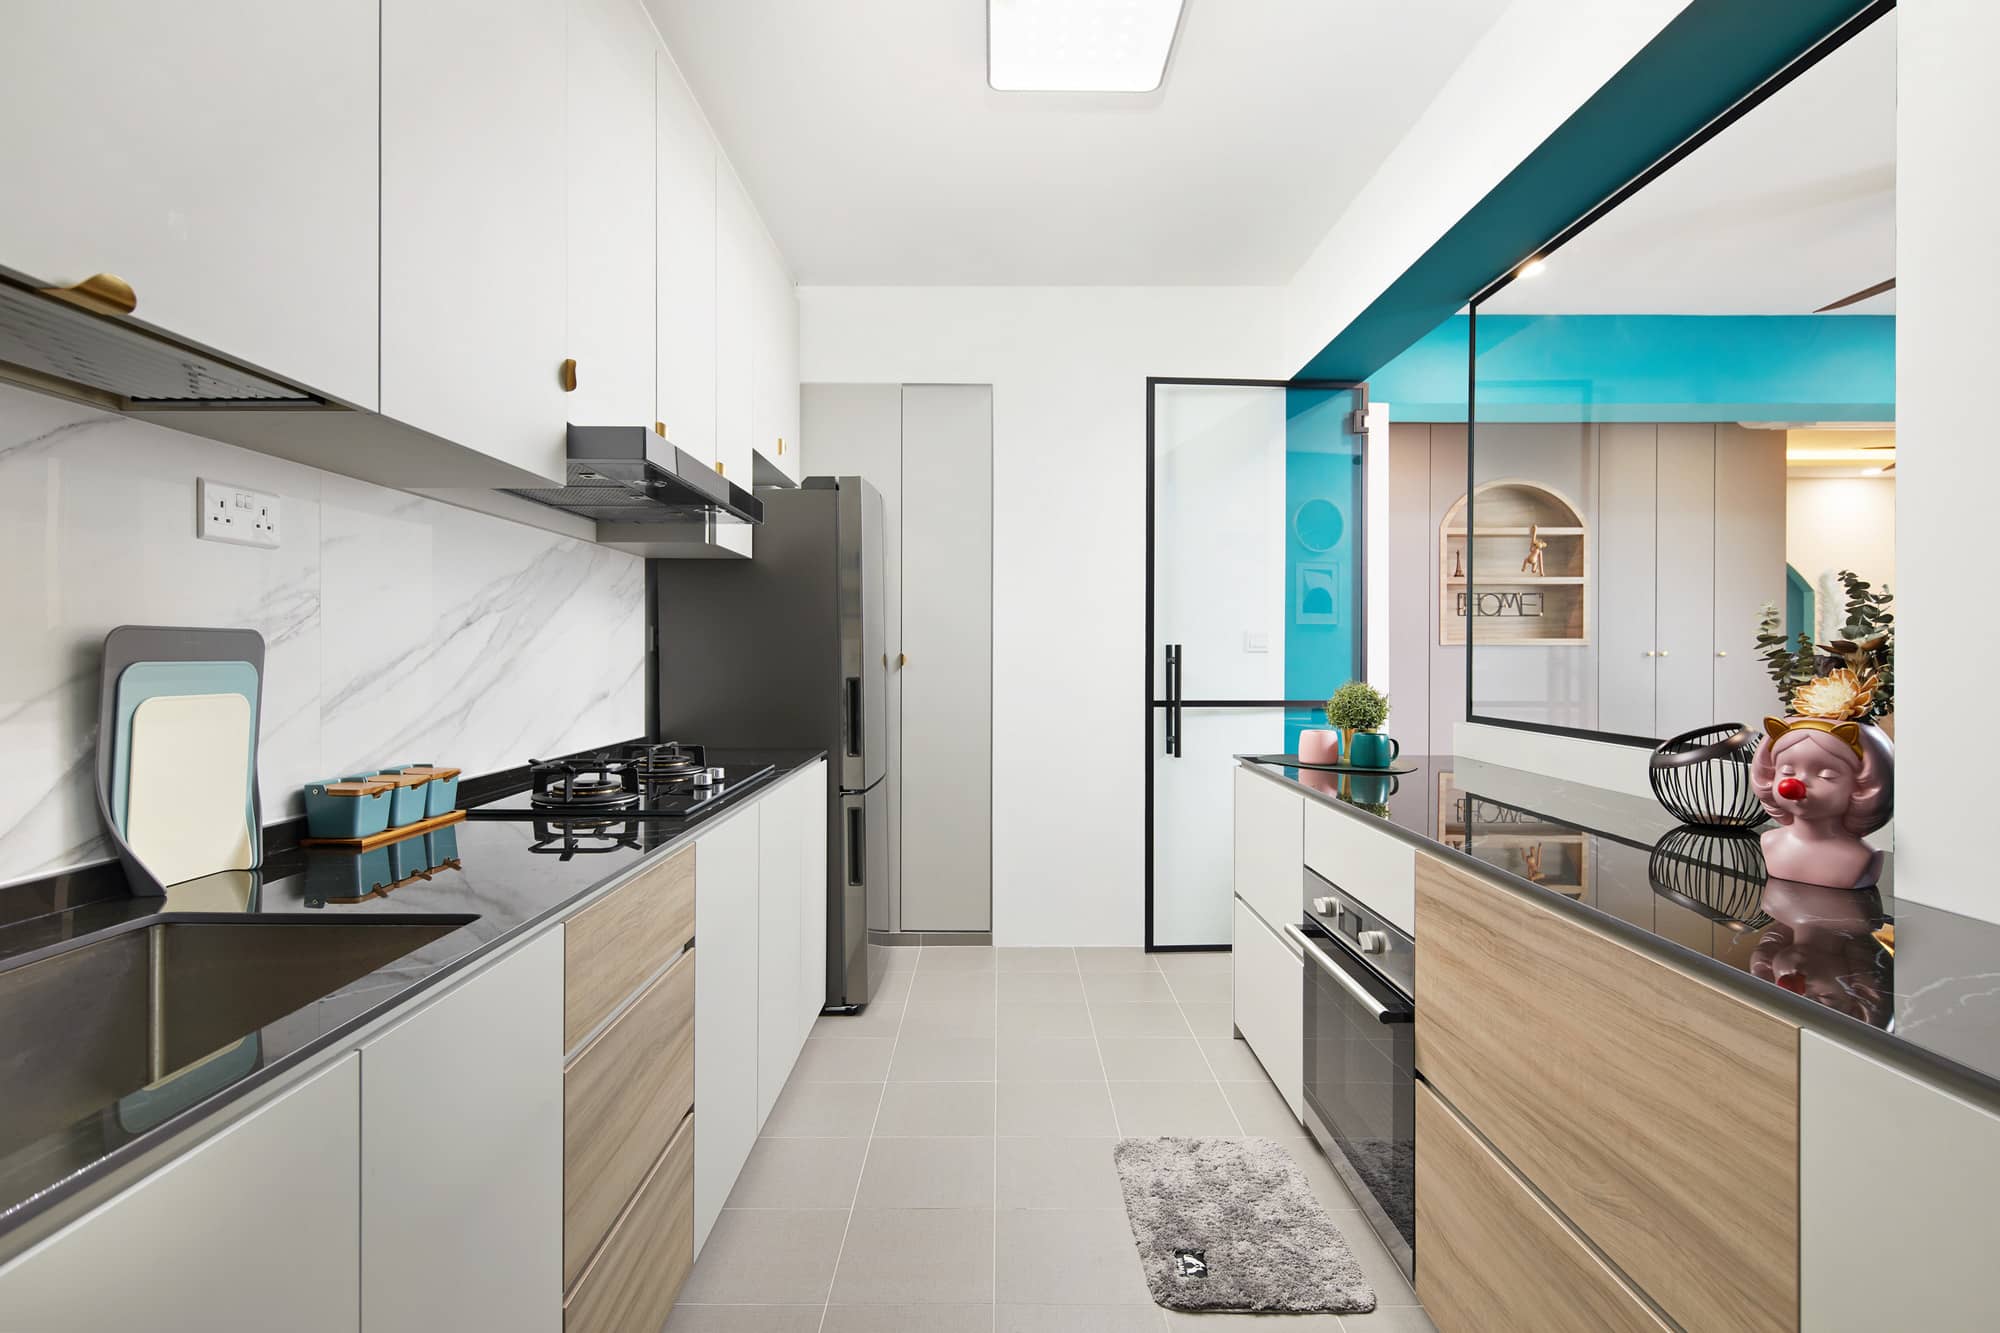 Upcoming 4-Room BTO Launches: Interior Design & Renovation Ideas